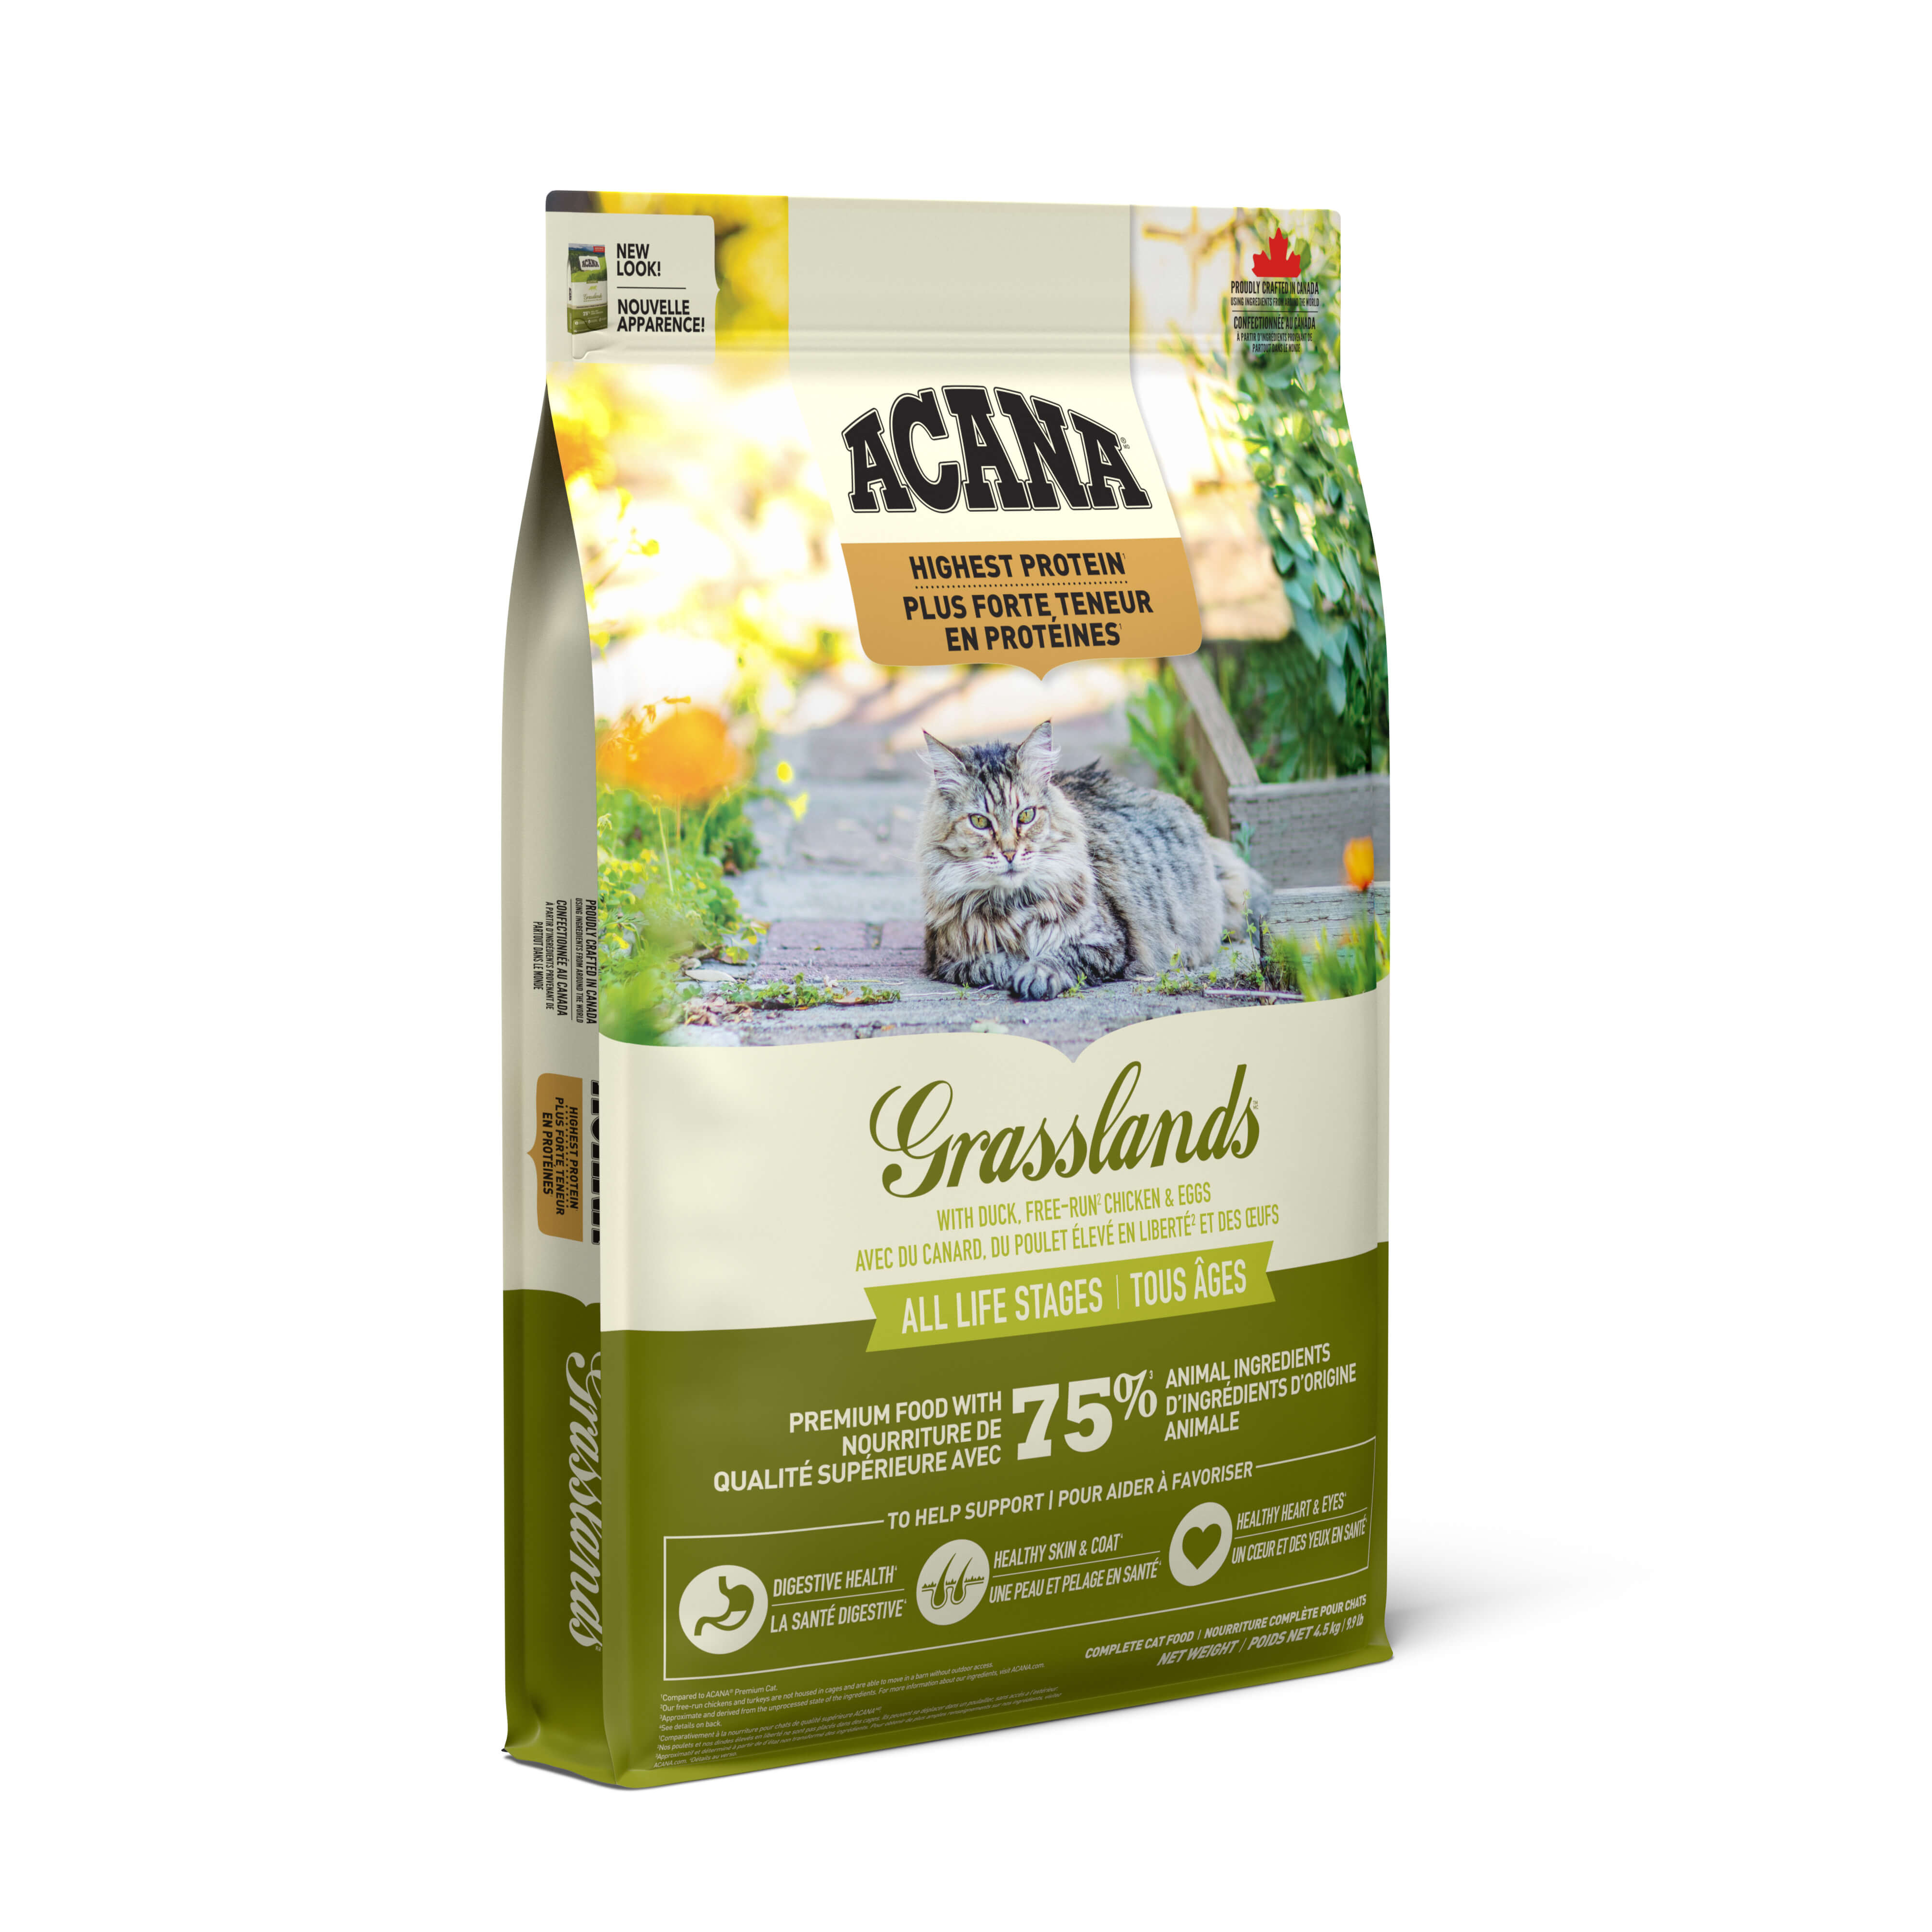 Acana - Highest Protein Grasslands (Dry Cat Food)